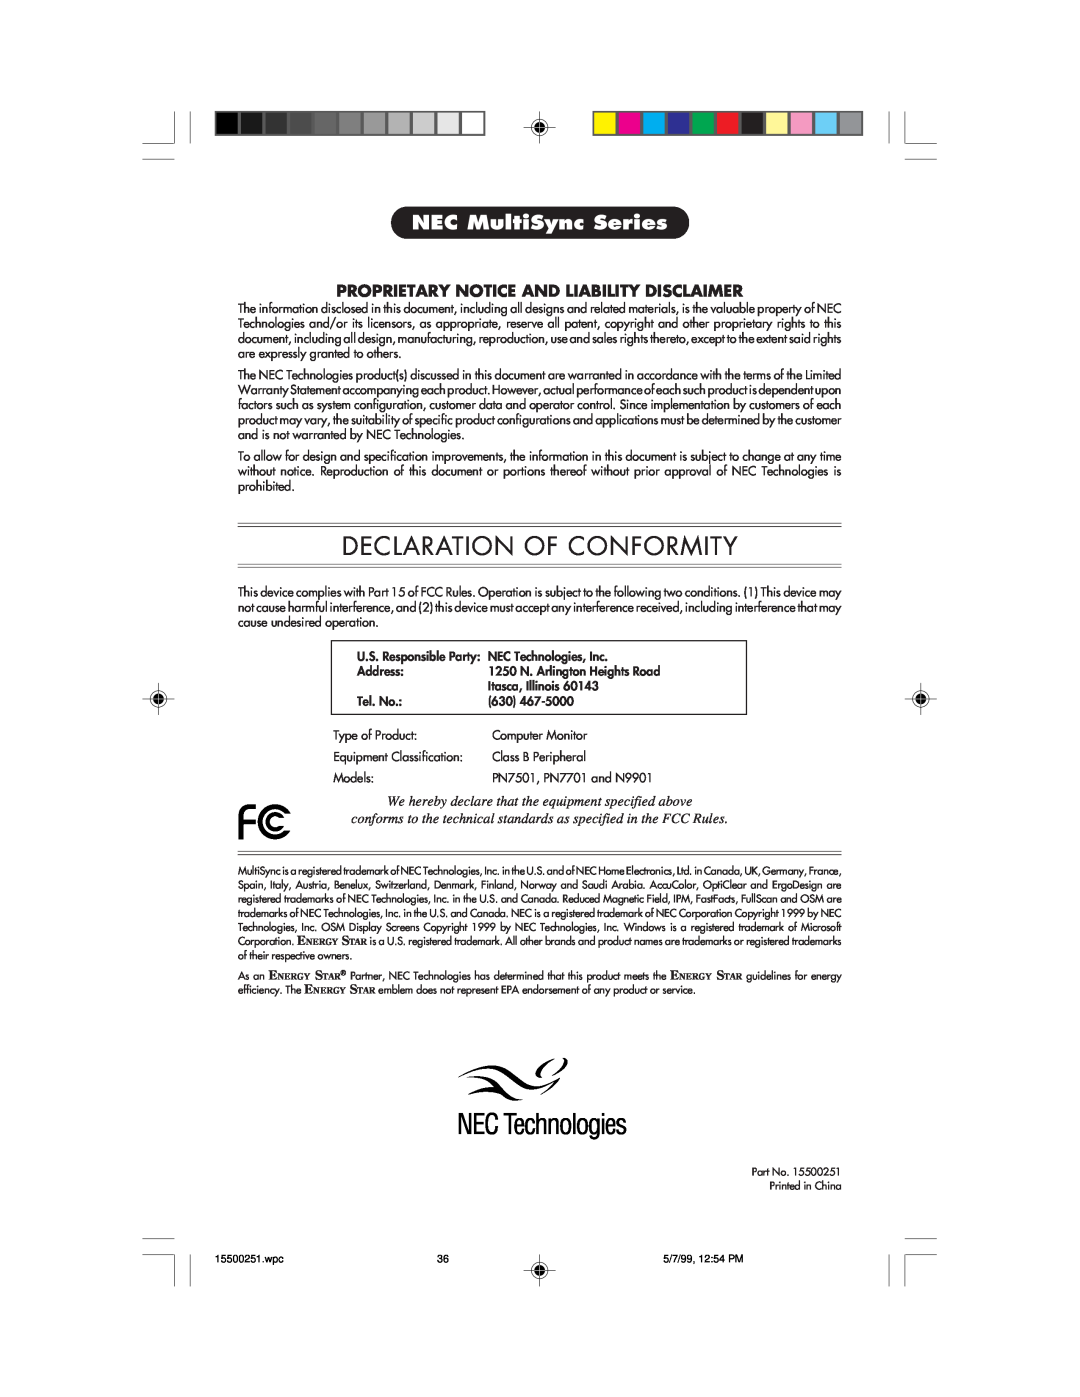 NEC 90, MultiSync 50 Declaration Of Conformity, NEC MultiSync Series, Proprietary Notice And Liability Disclaimer 